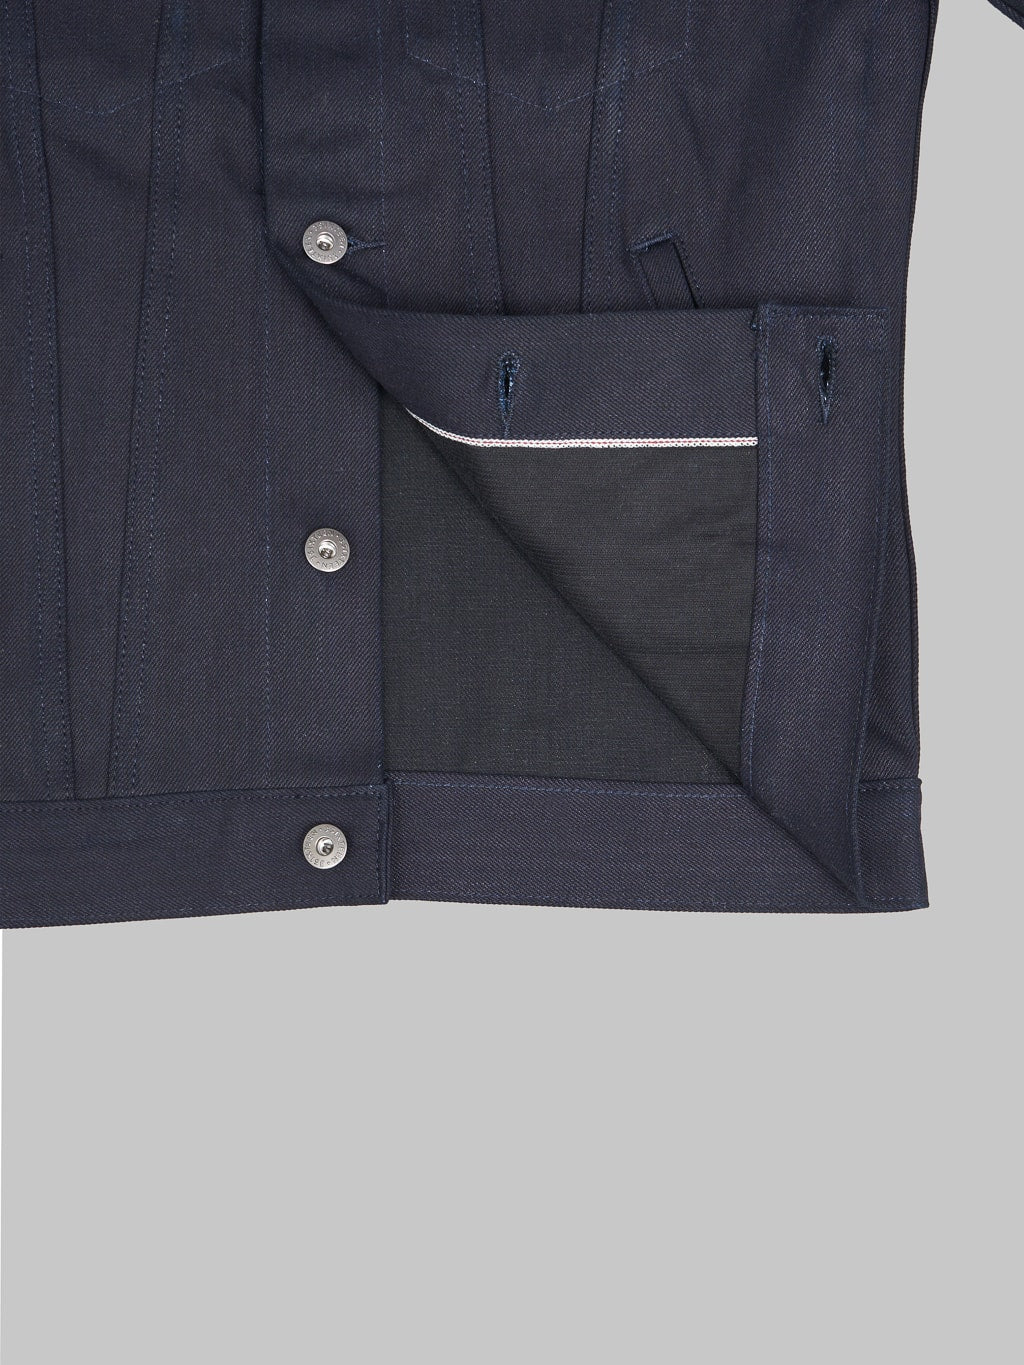 3sixteen type III denim jacket shadow selvedge indigo doughnut buttons weft